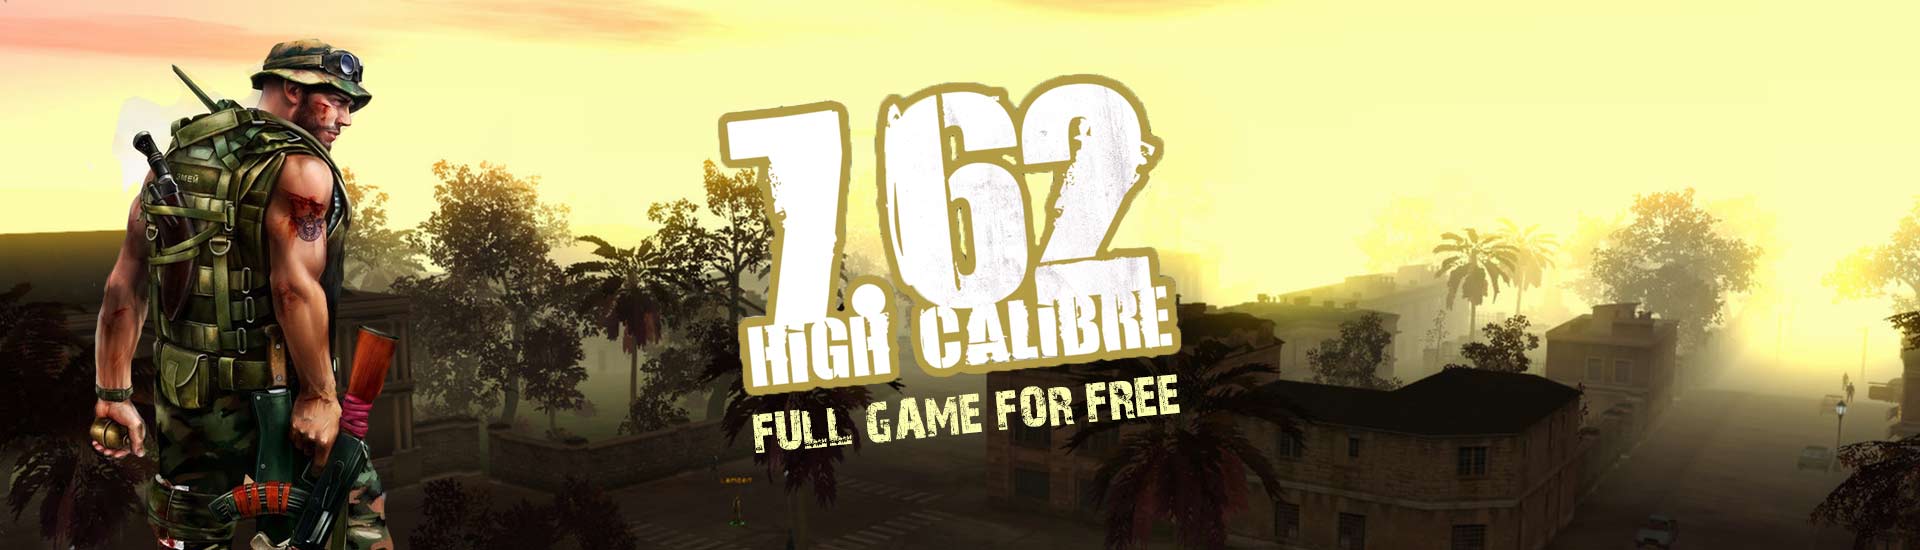 [indiegala]-get-full-free-game-–-7,62-high-calibre